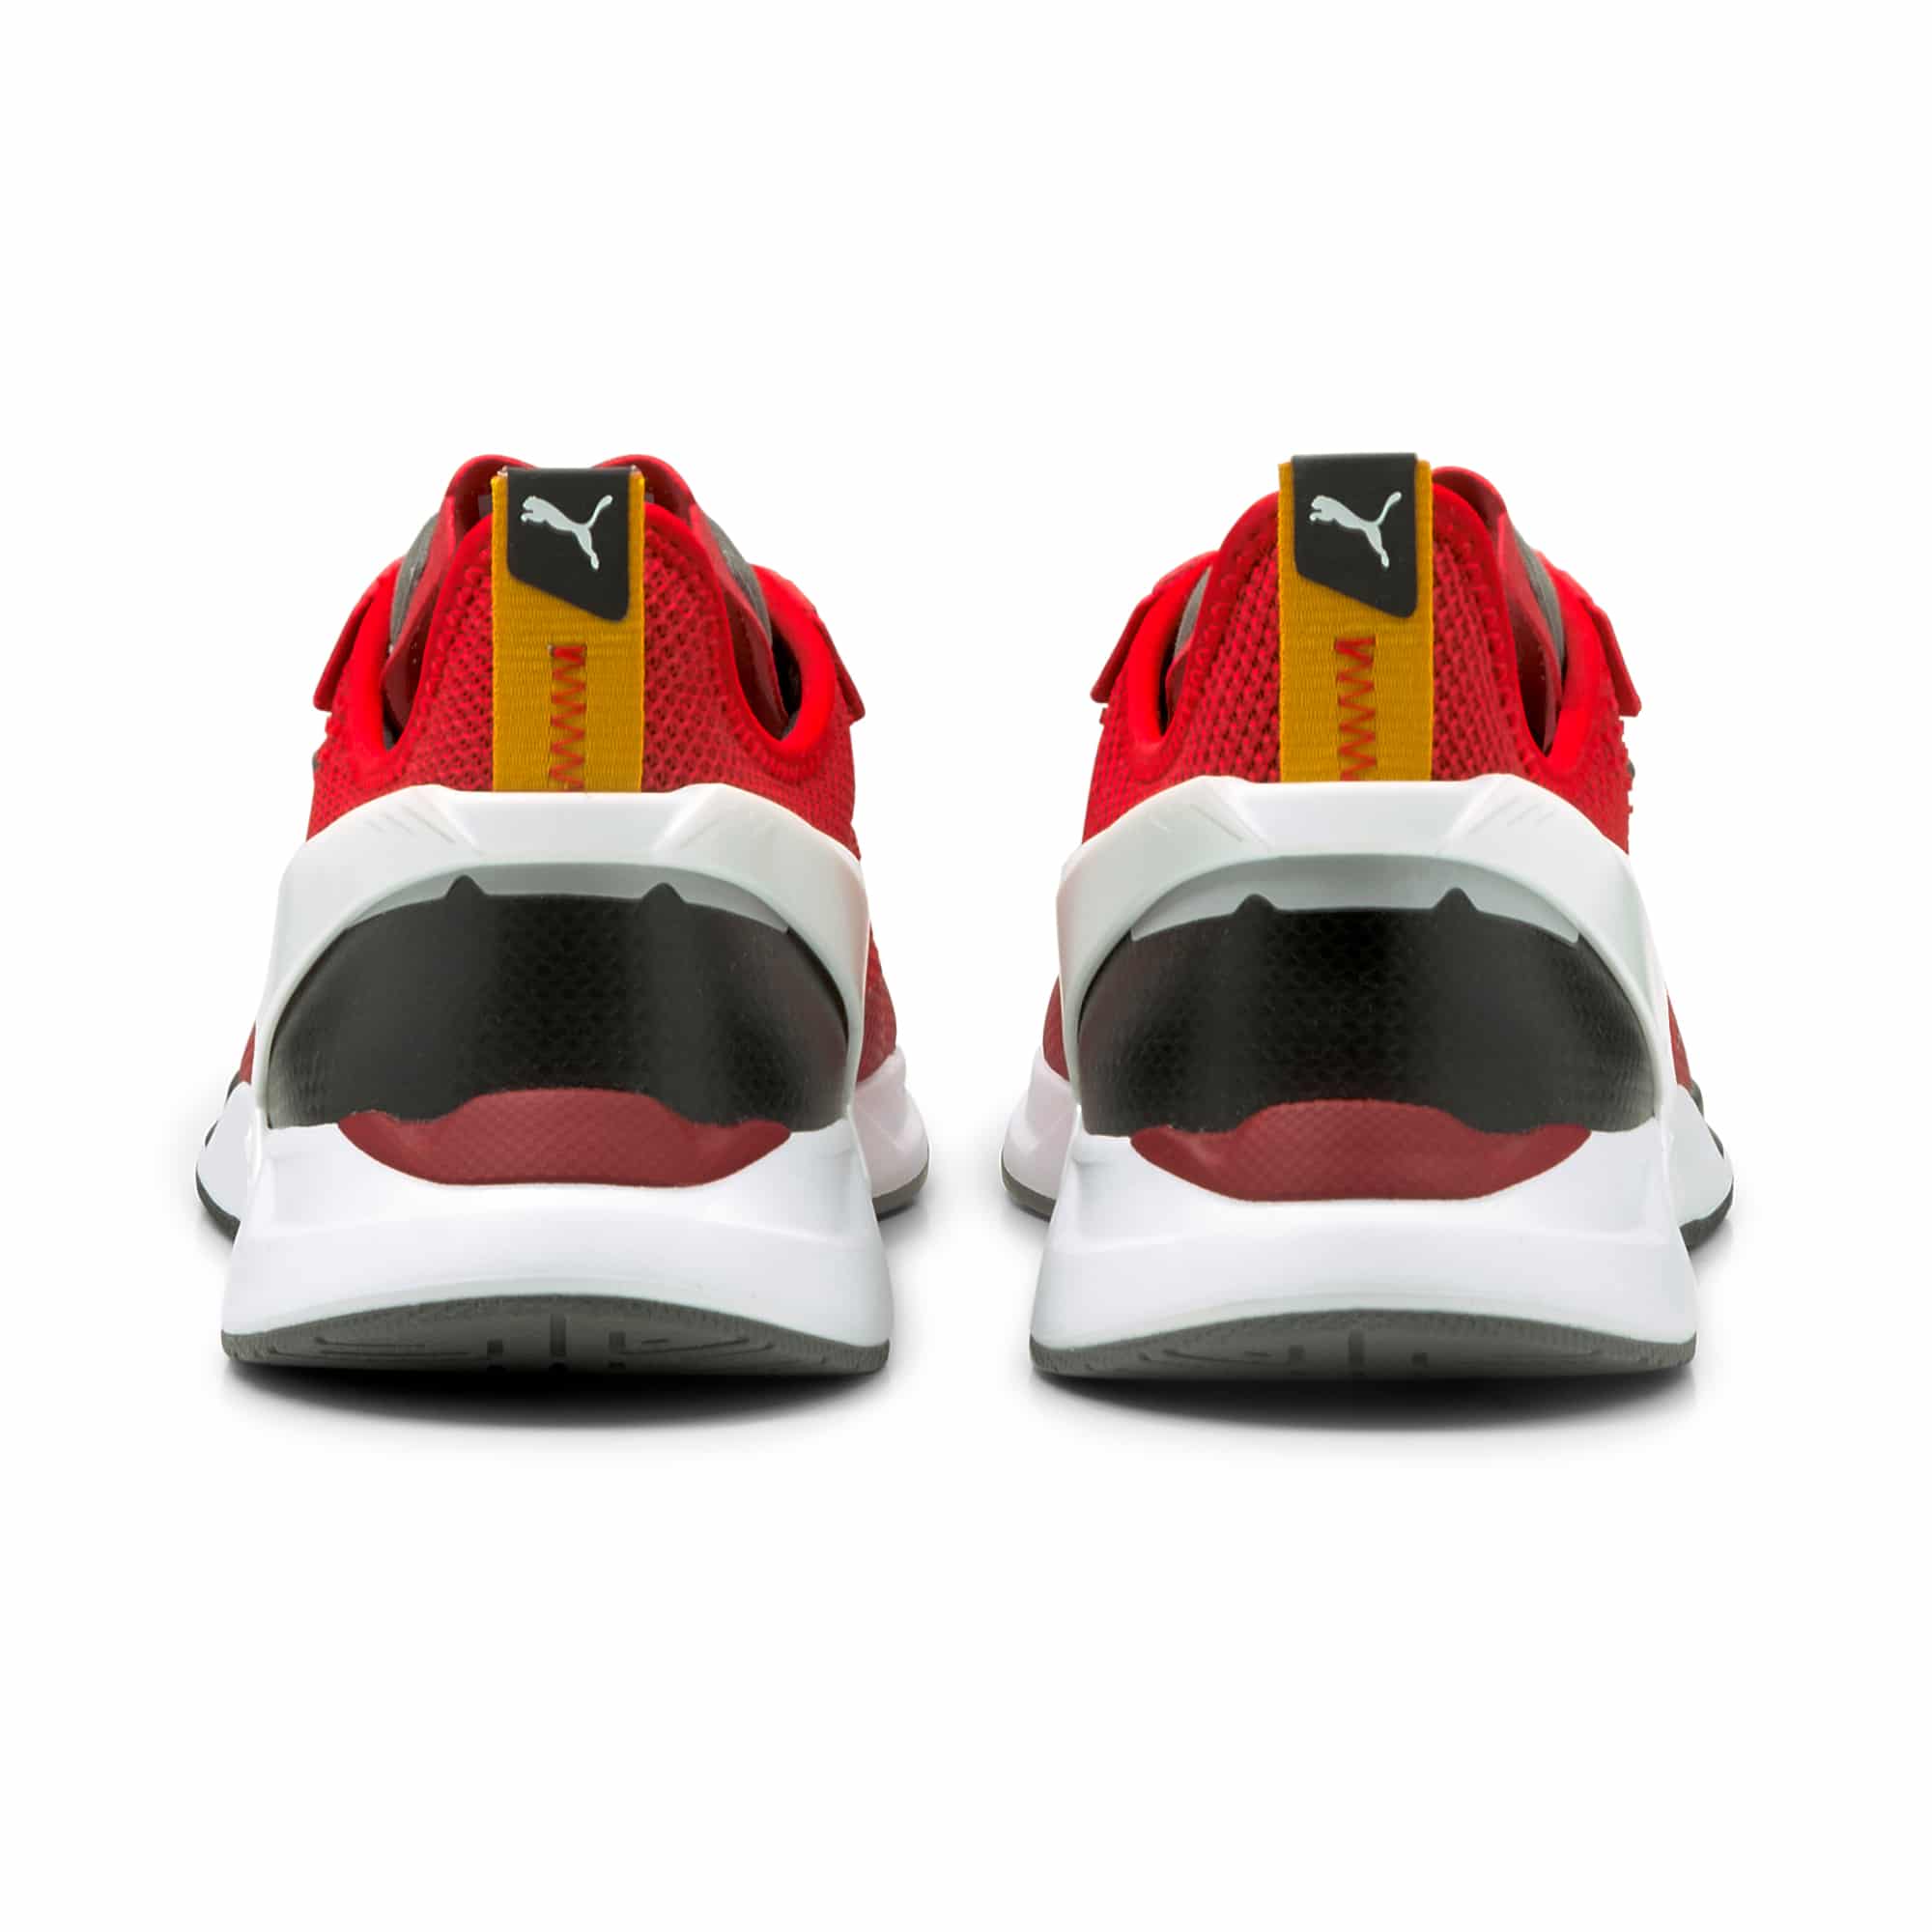 PUMA-Ferrari-ION-Speed-Carlos-Sainz-zapatillas